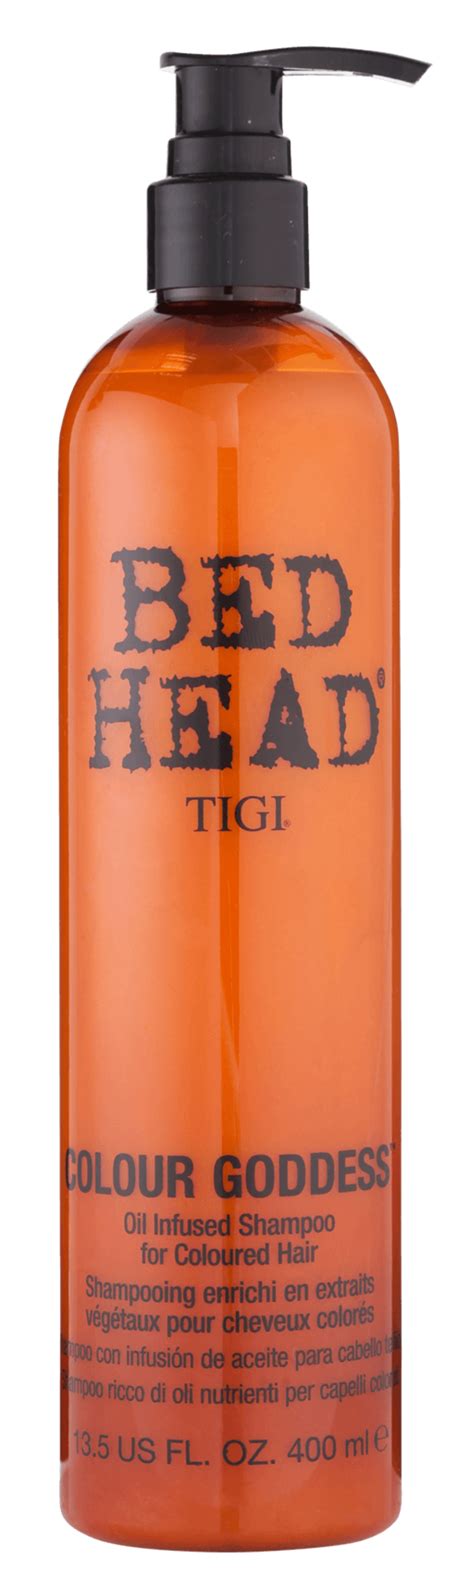 Tigi Bed Head Colour Goddess Oil Infused Shampoo 400 Ml 5 99